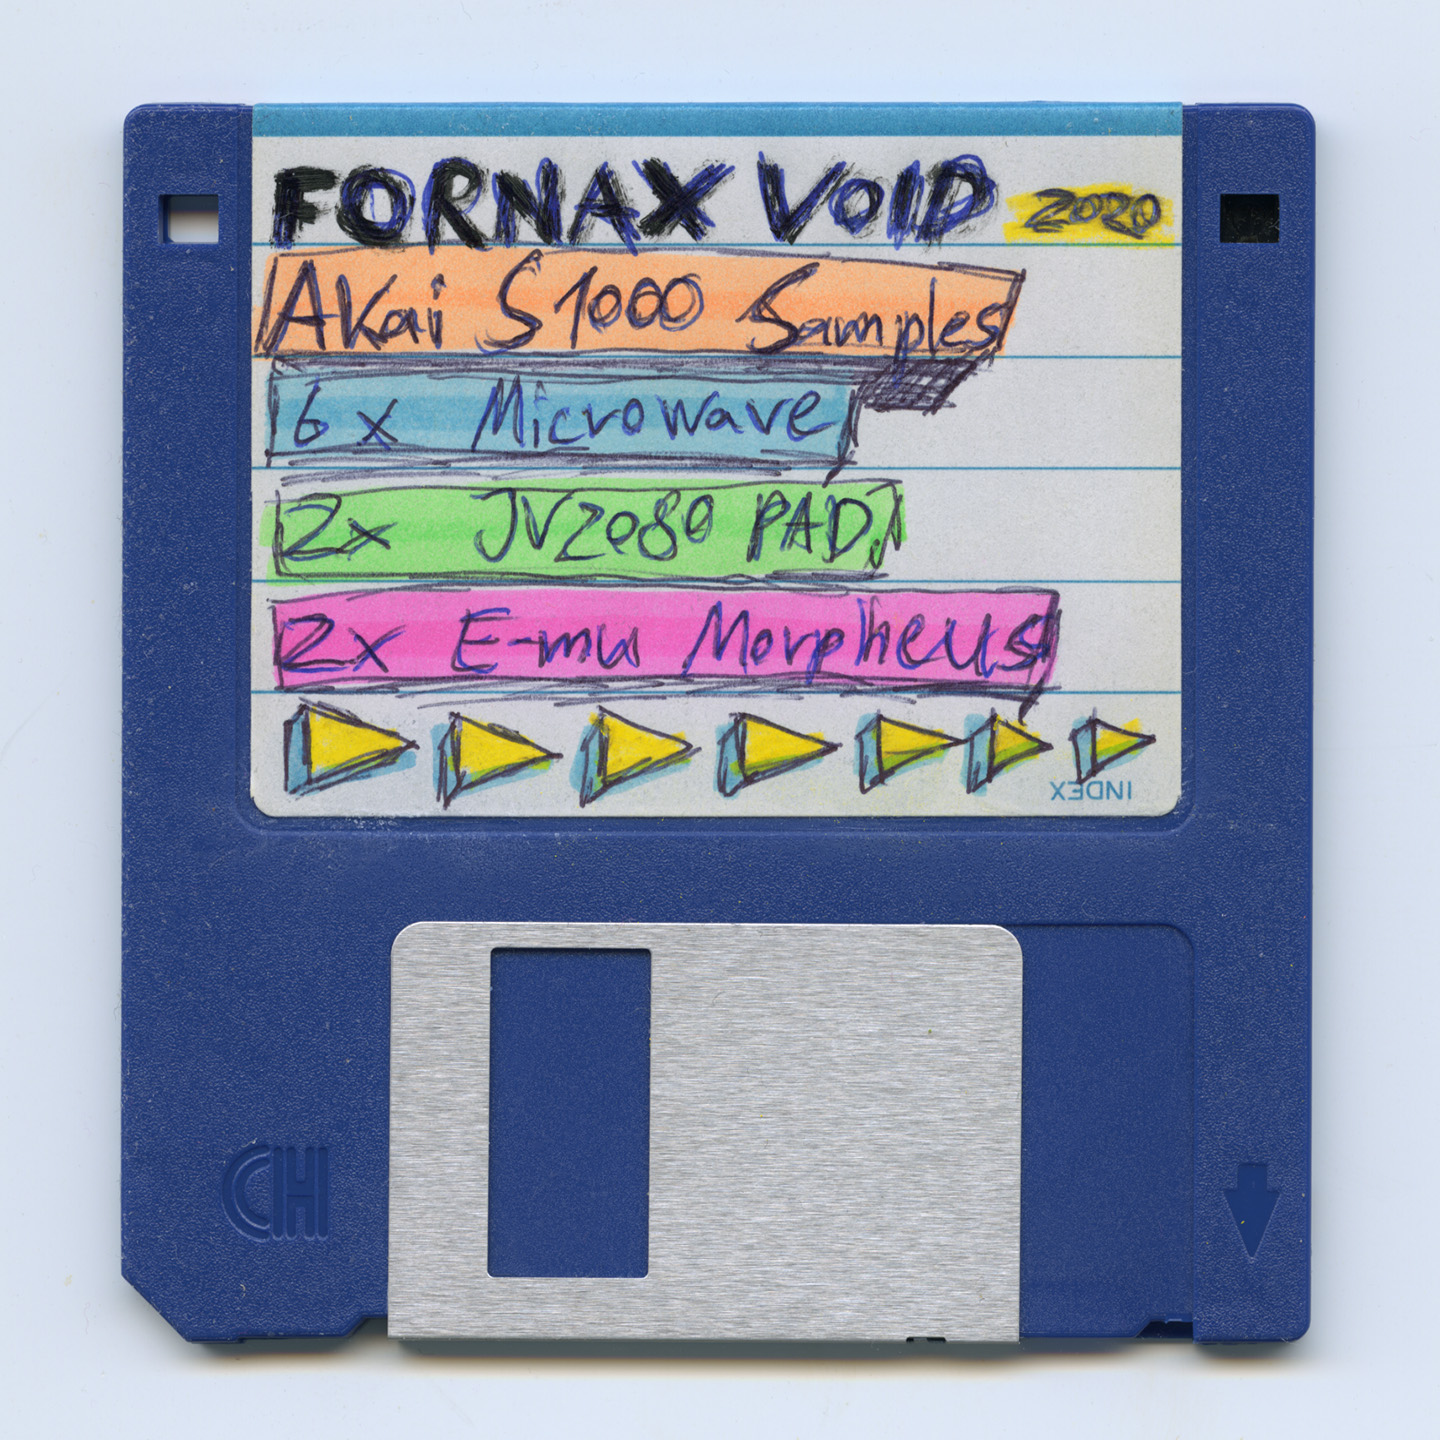 Fornax Void Akai S1000 samples floppy disk 2020.